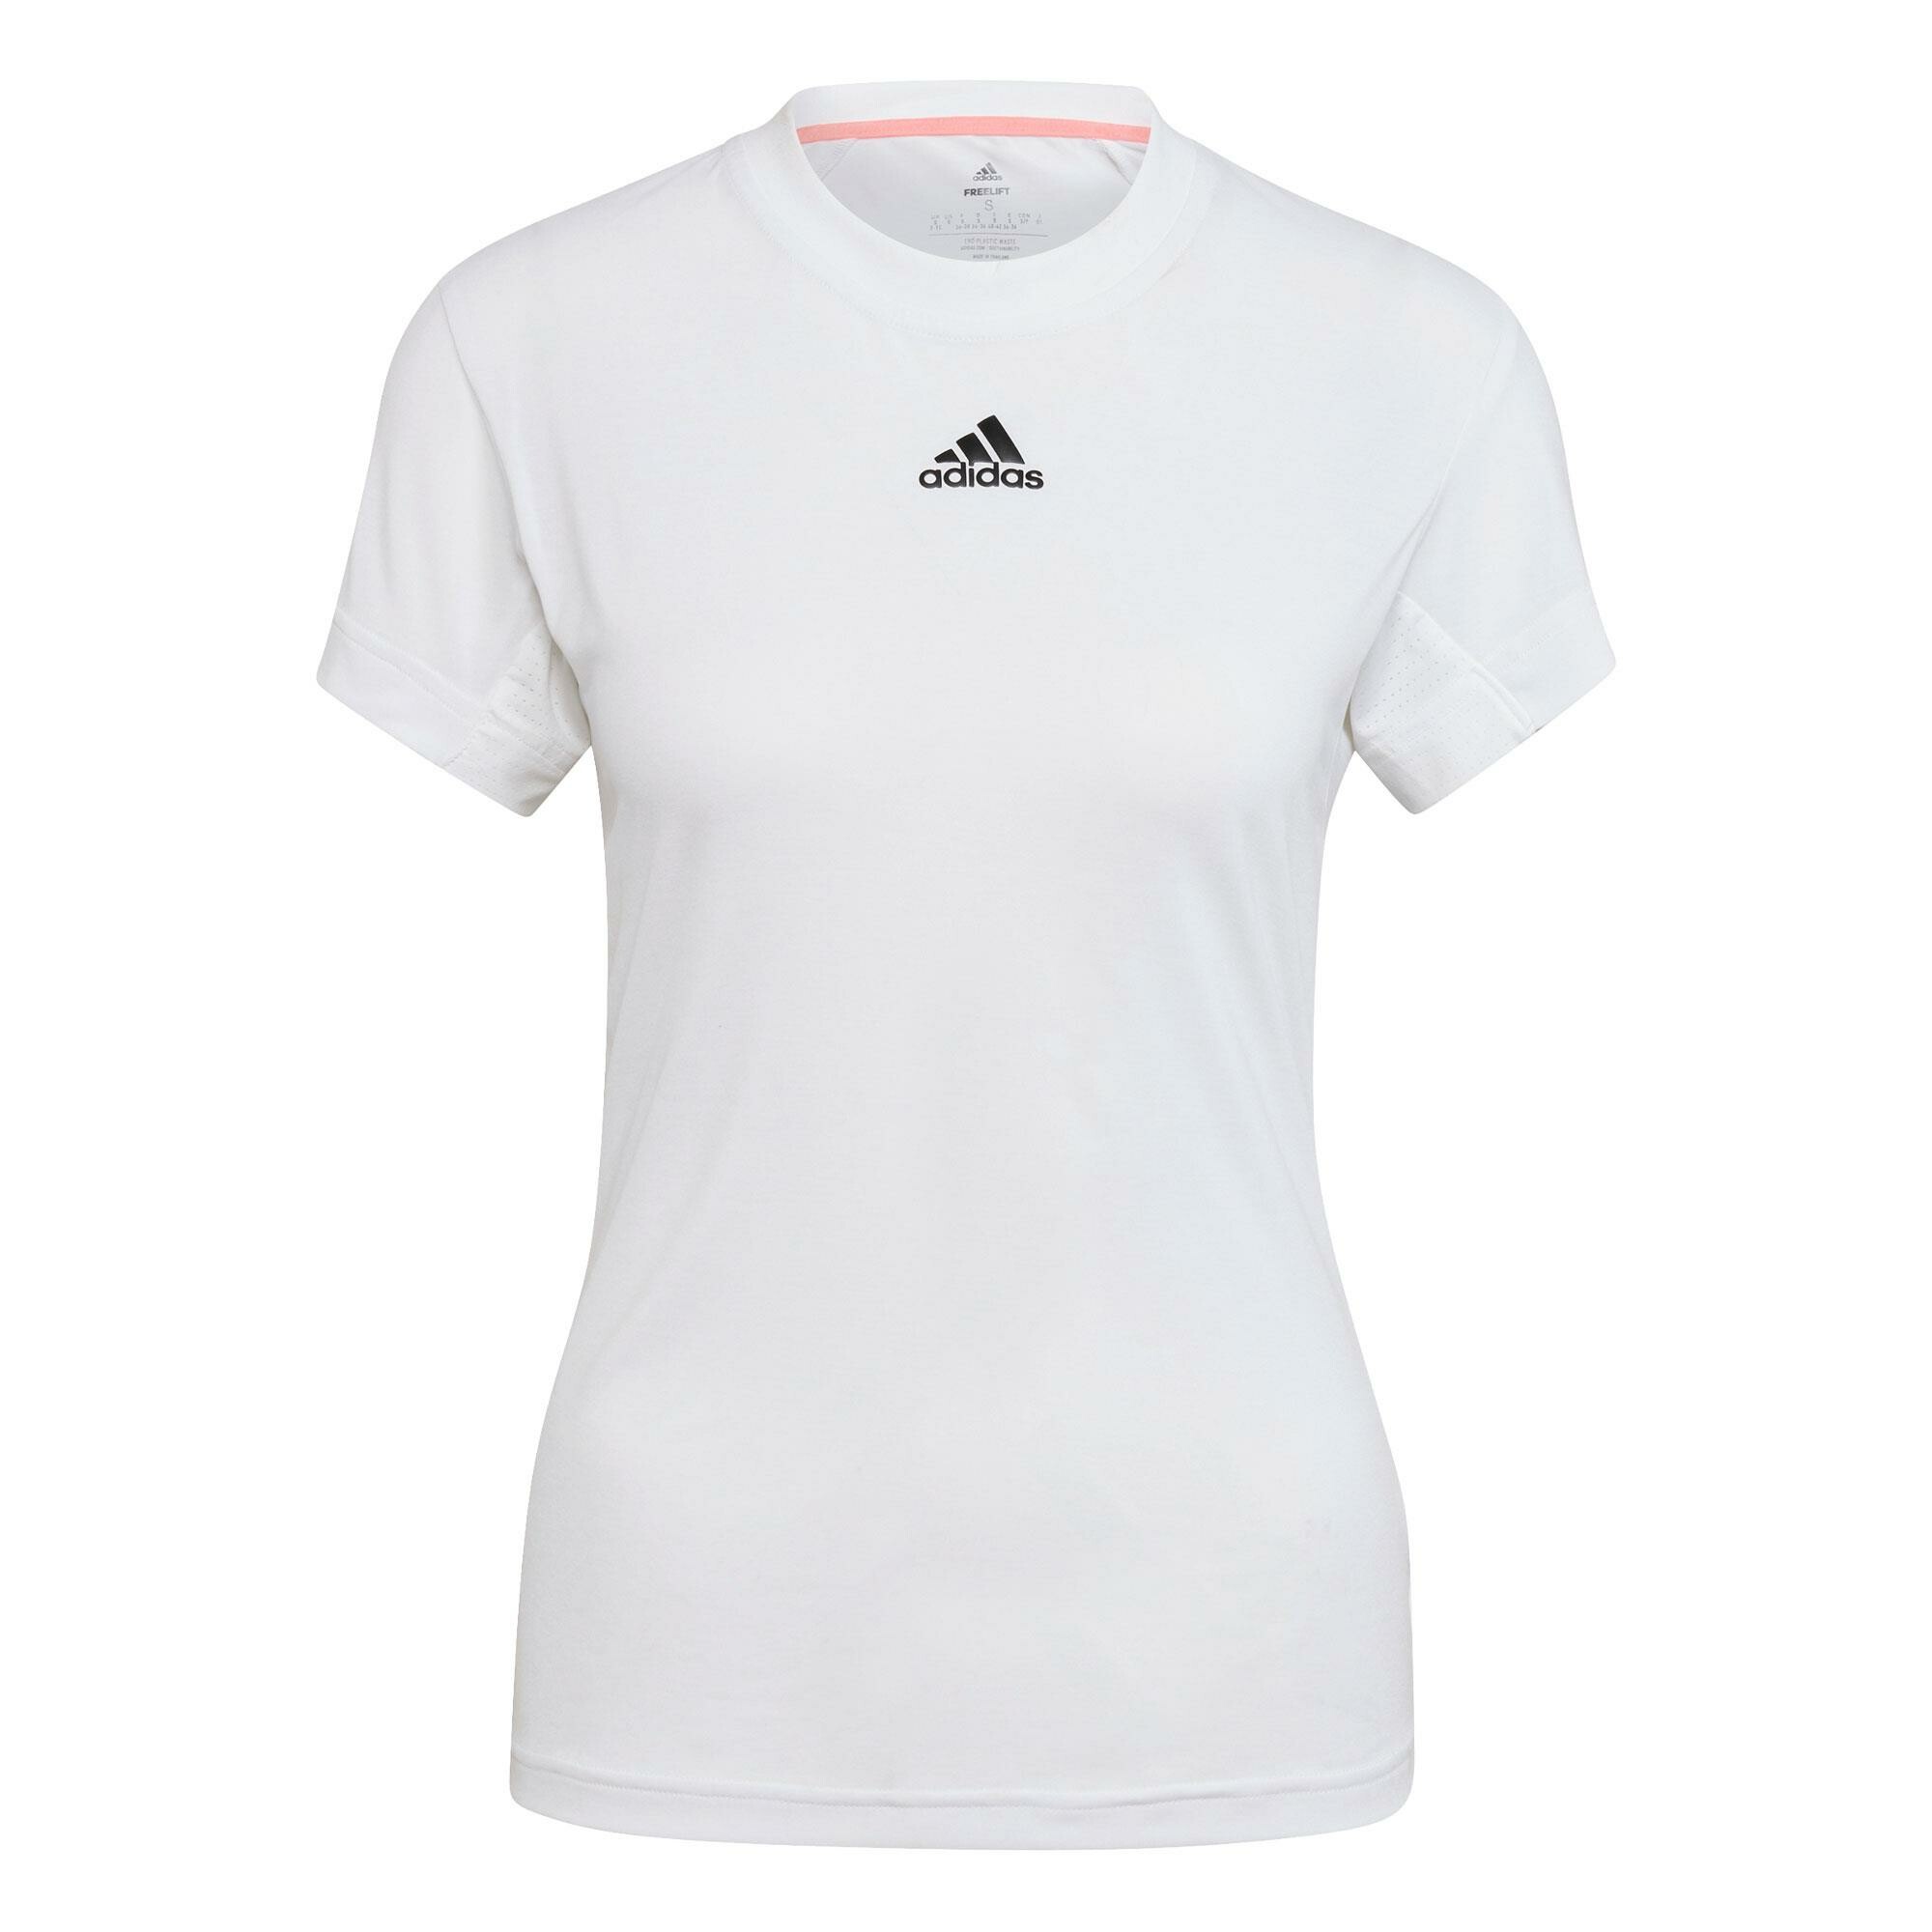 Adidas tennisshirt dames white